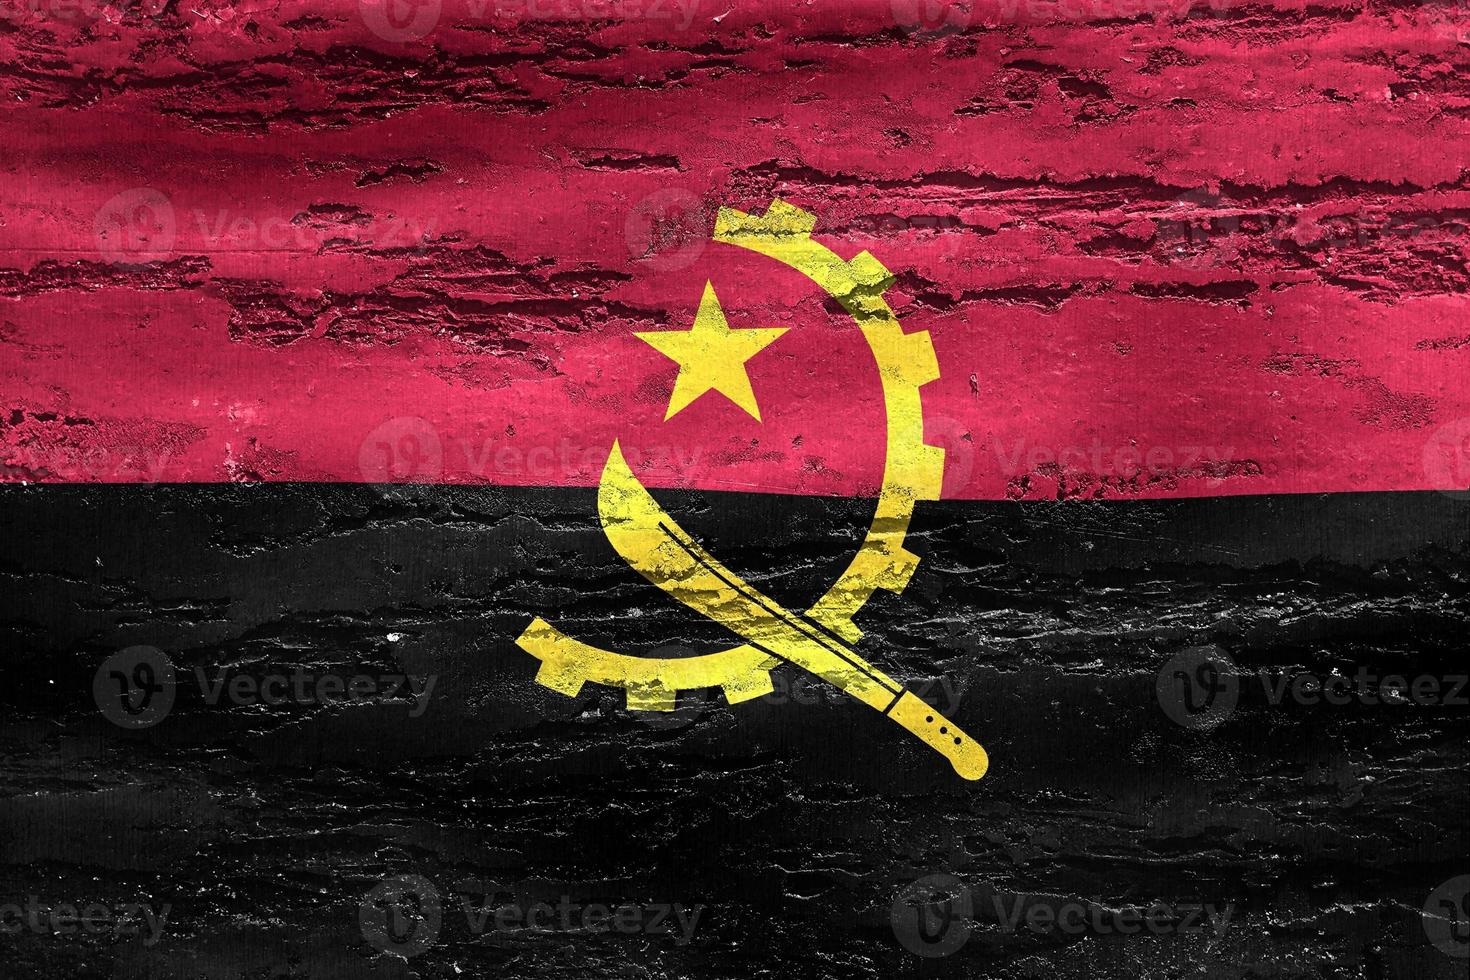 angola flagga - realistiskt viftande tygflagga foto